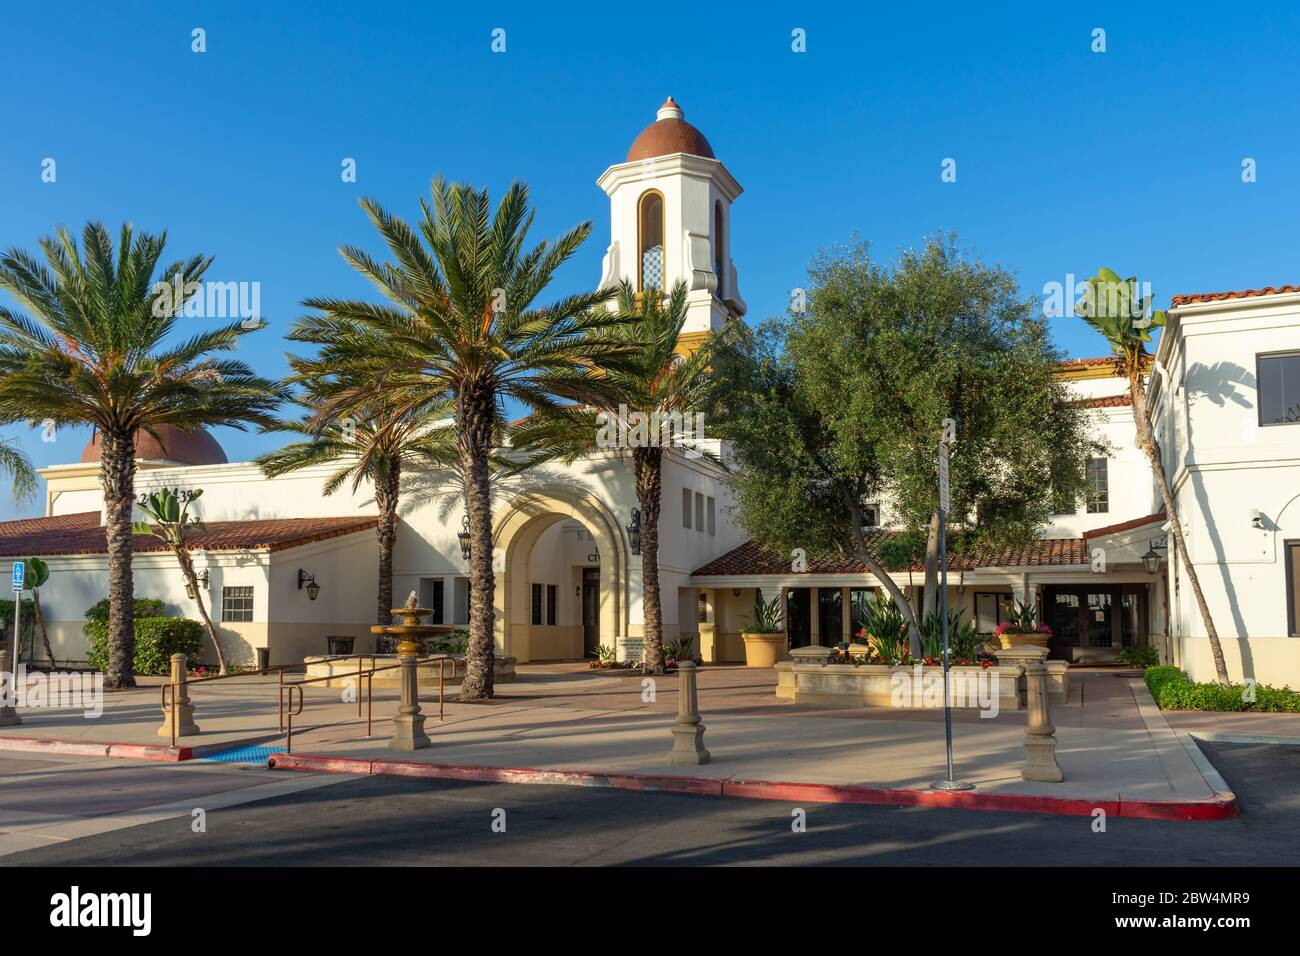 Laguna Hills, CA / USA – November 16, 2020: Civic Center building for the city of Laguna Hills in Orange County, California located on El Toro Road. Stock Photo